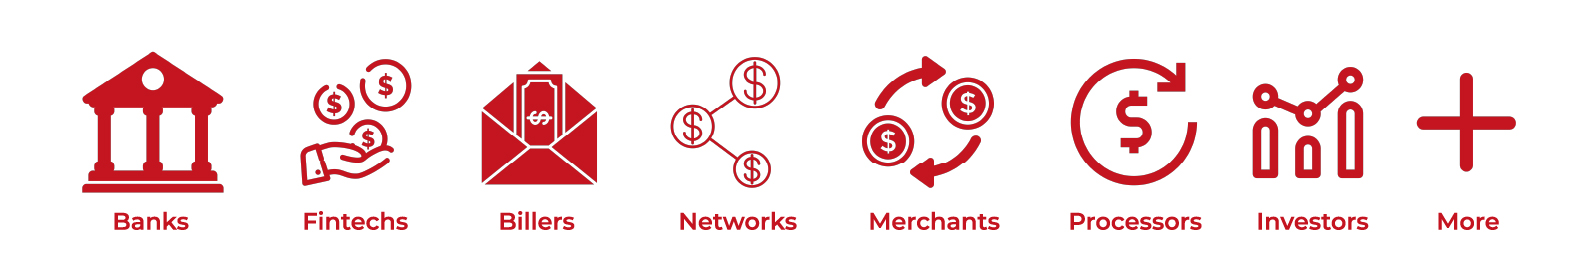 Symbols for Banks, Fintechs, Billers, Networks, Merchants, Processors, Investors